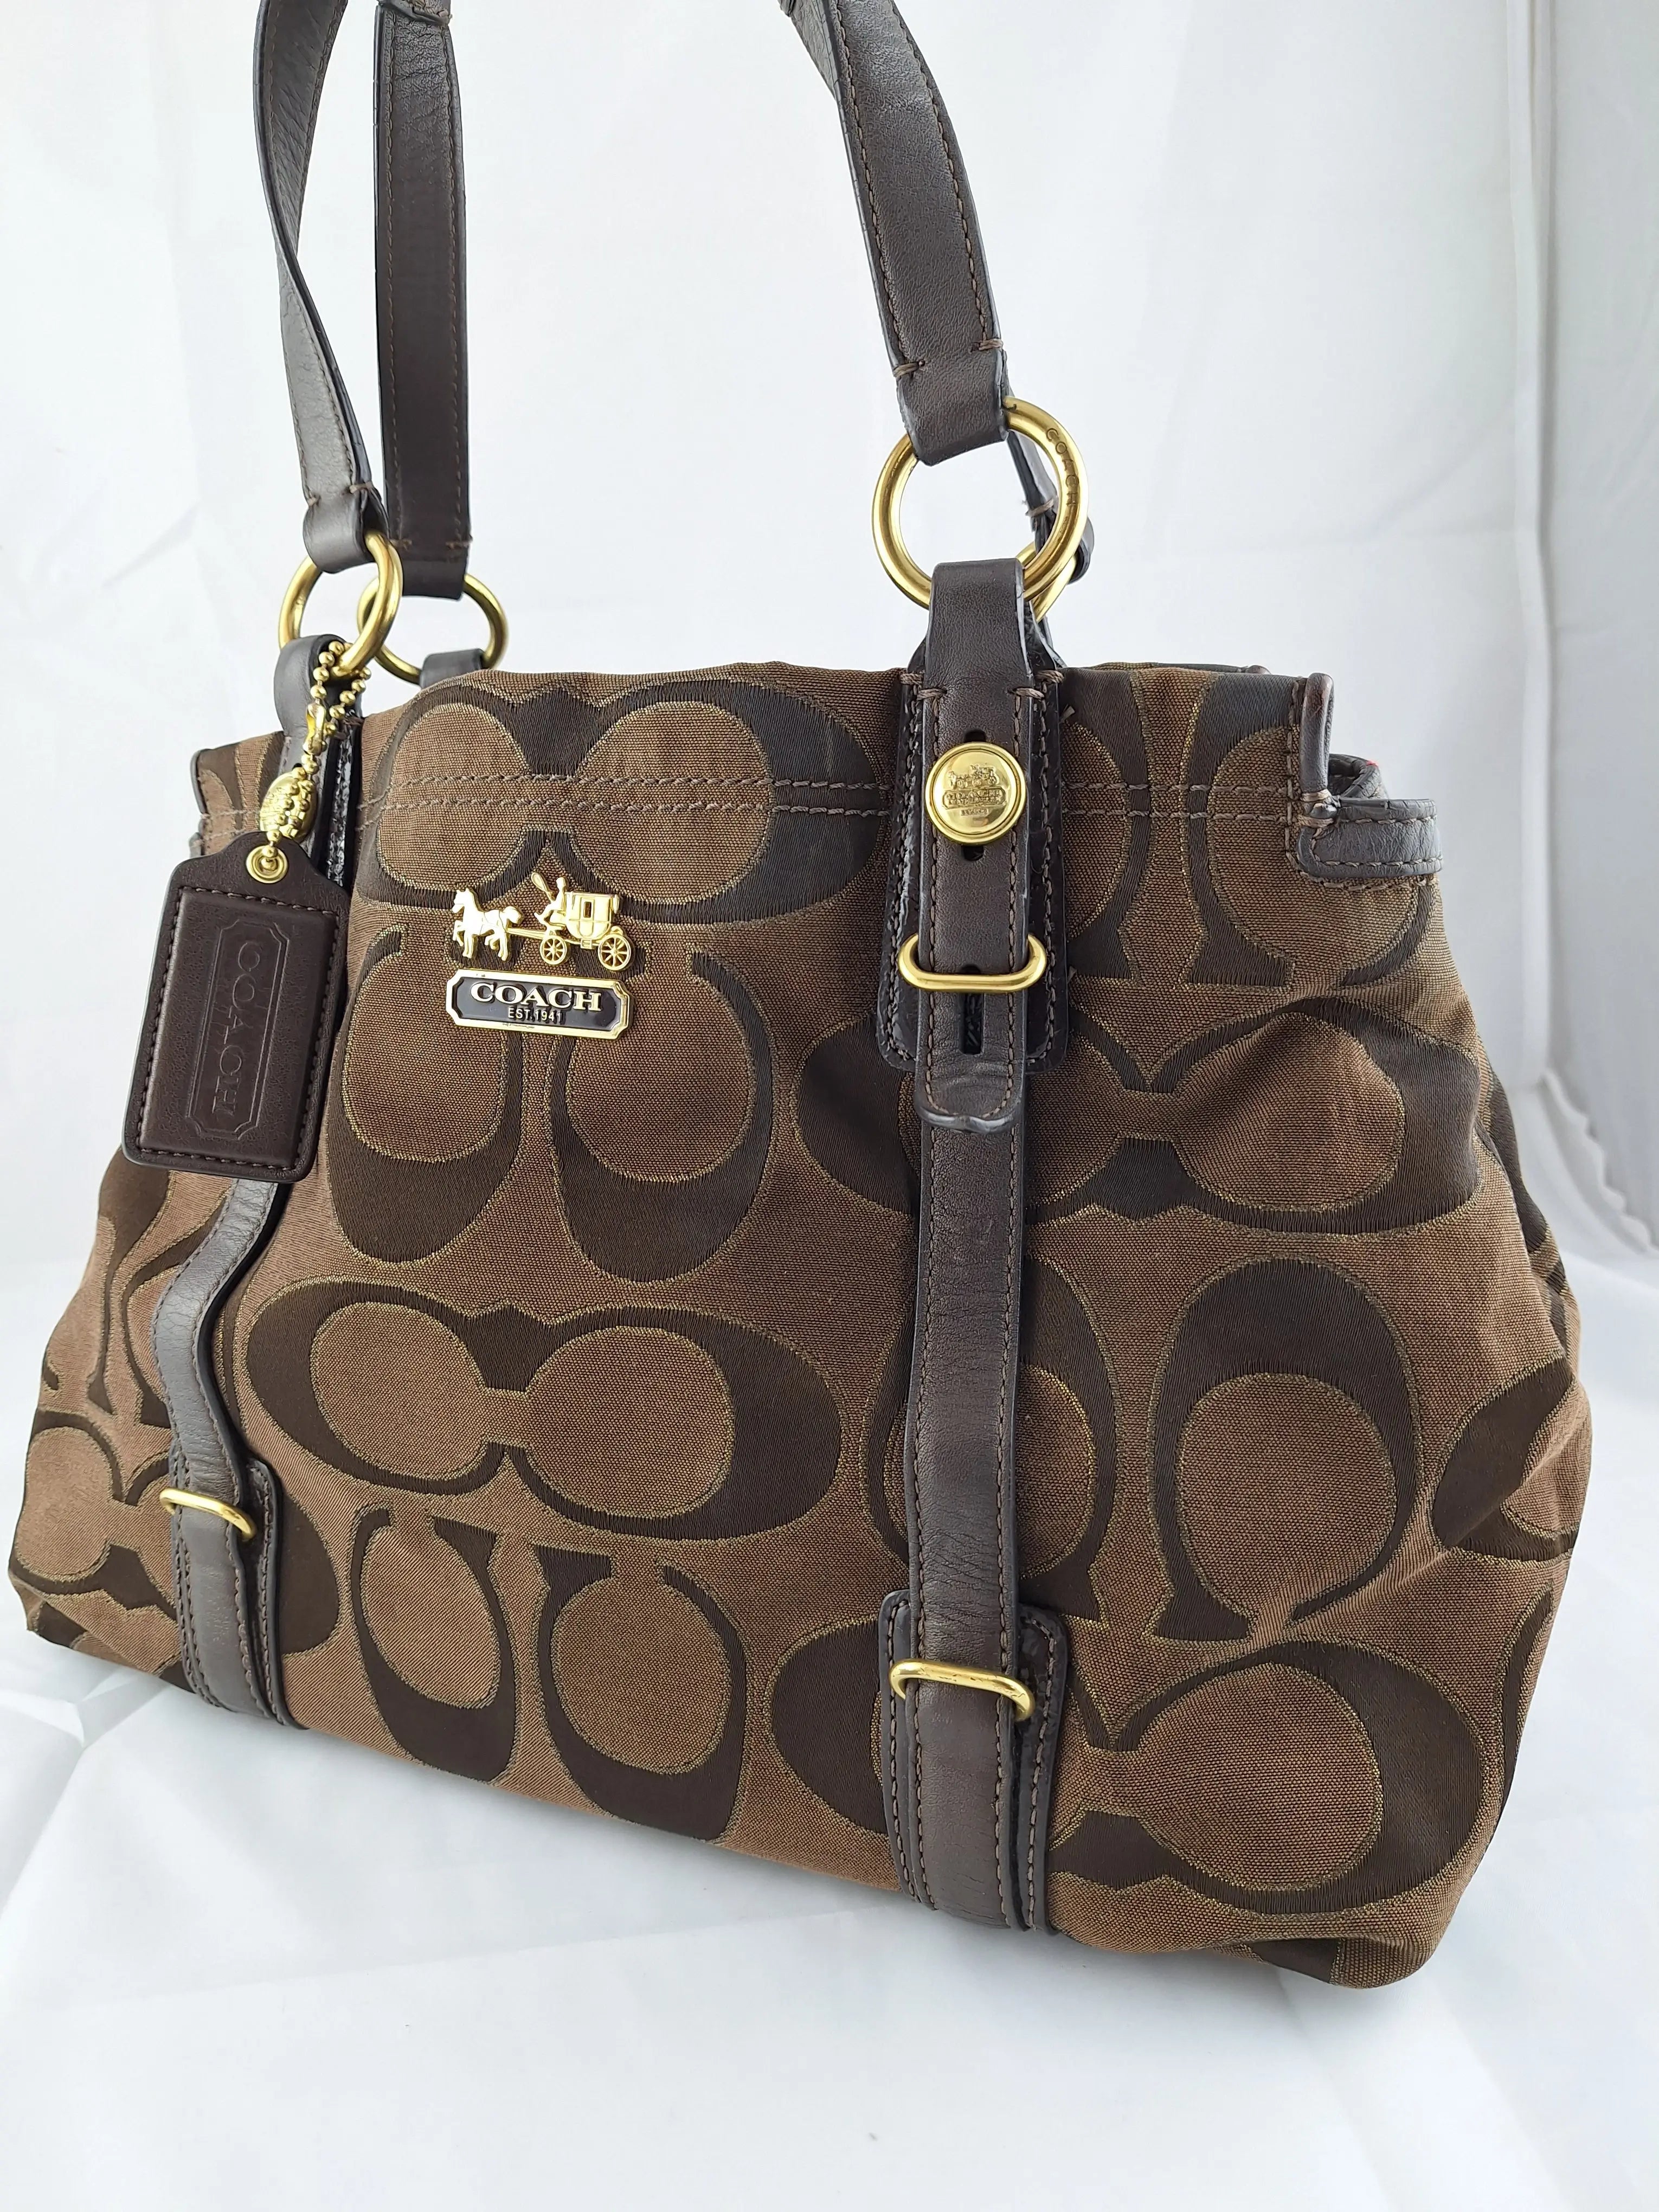 used signature coach handbags | eBay